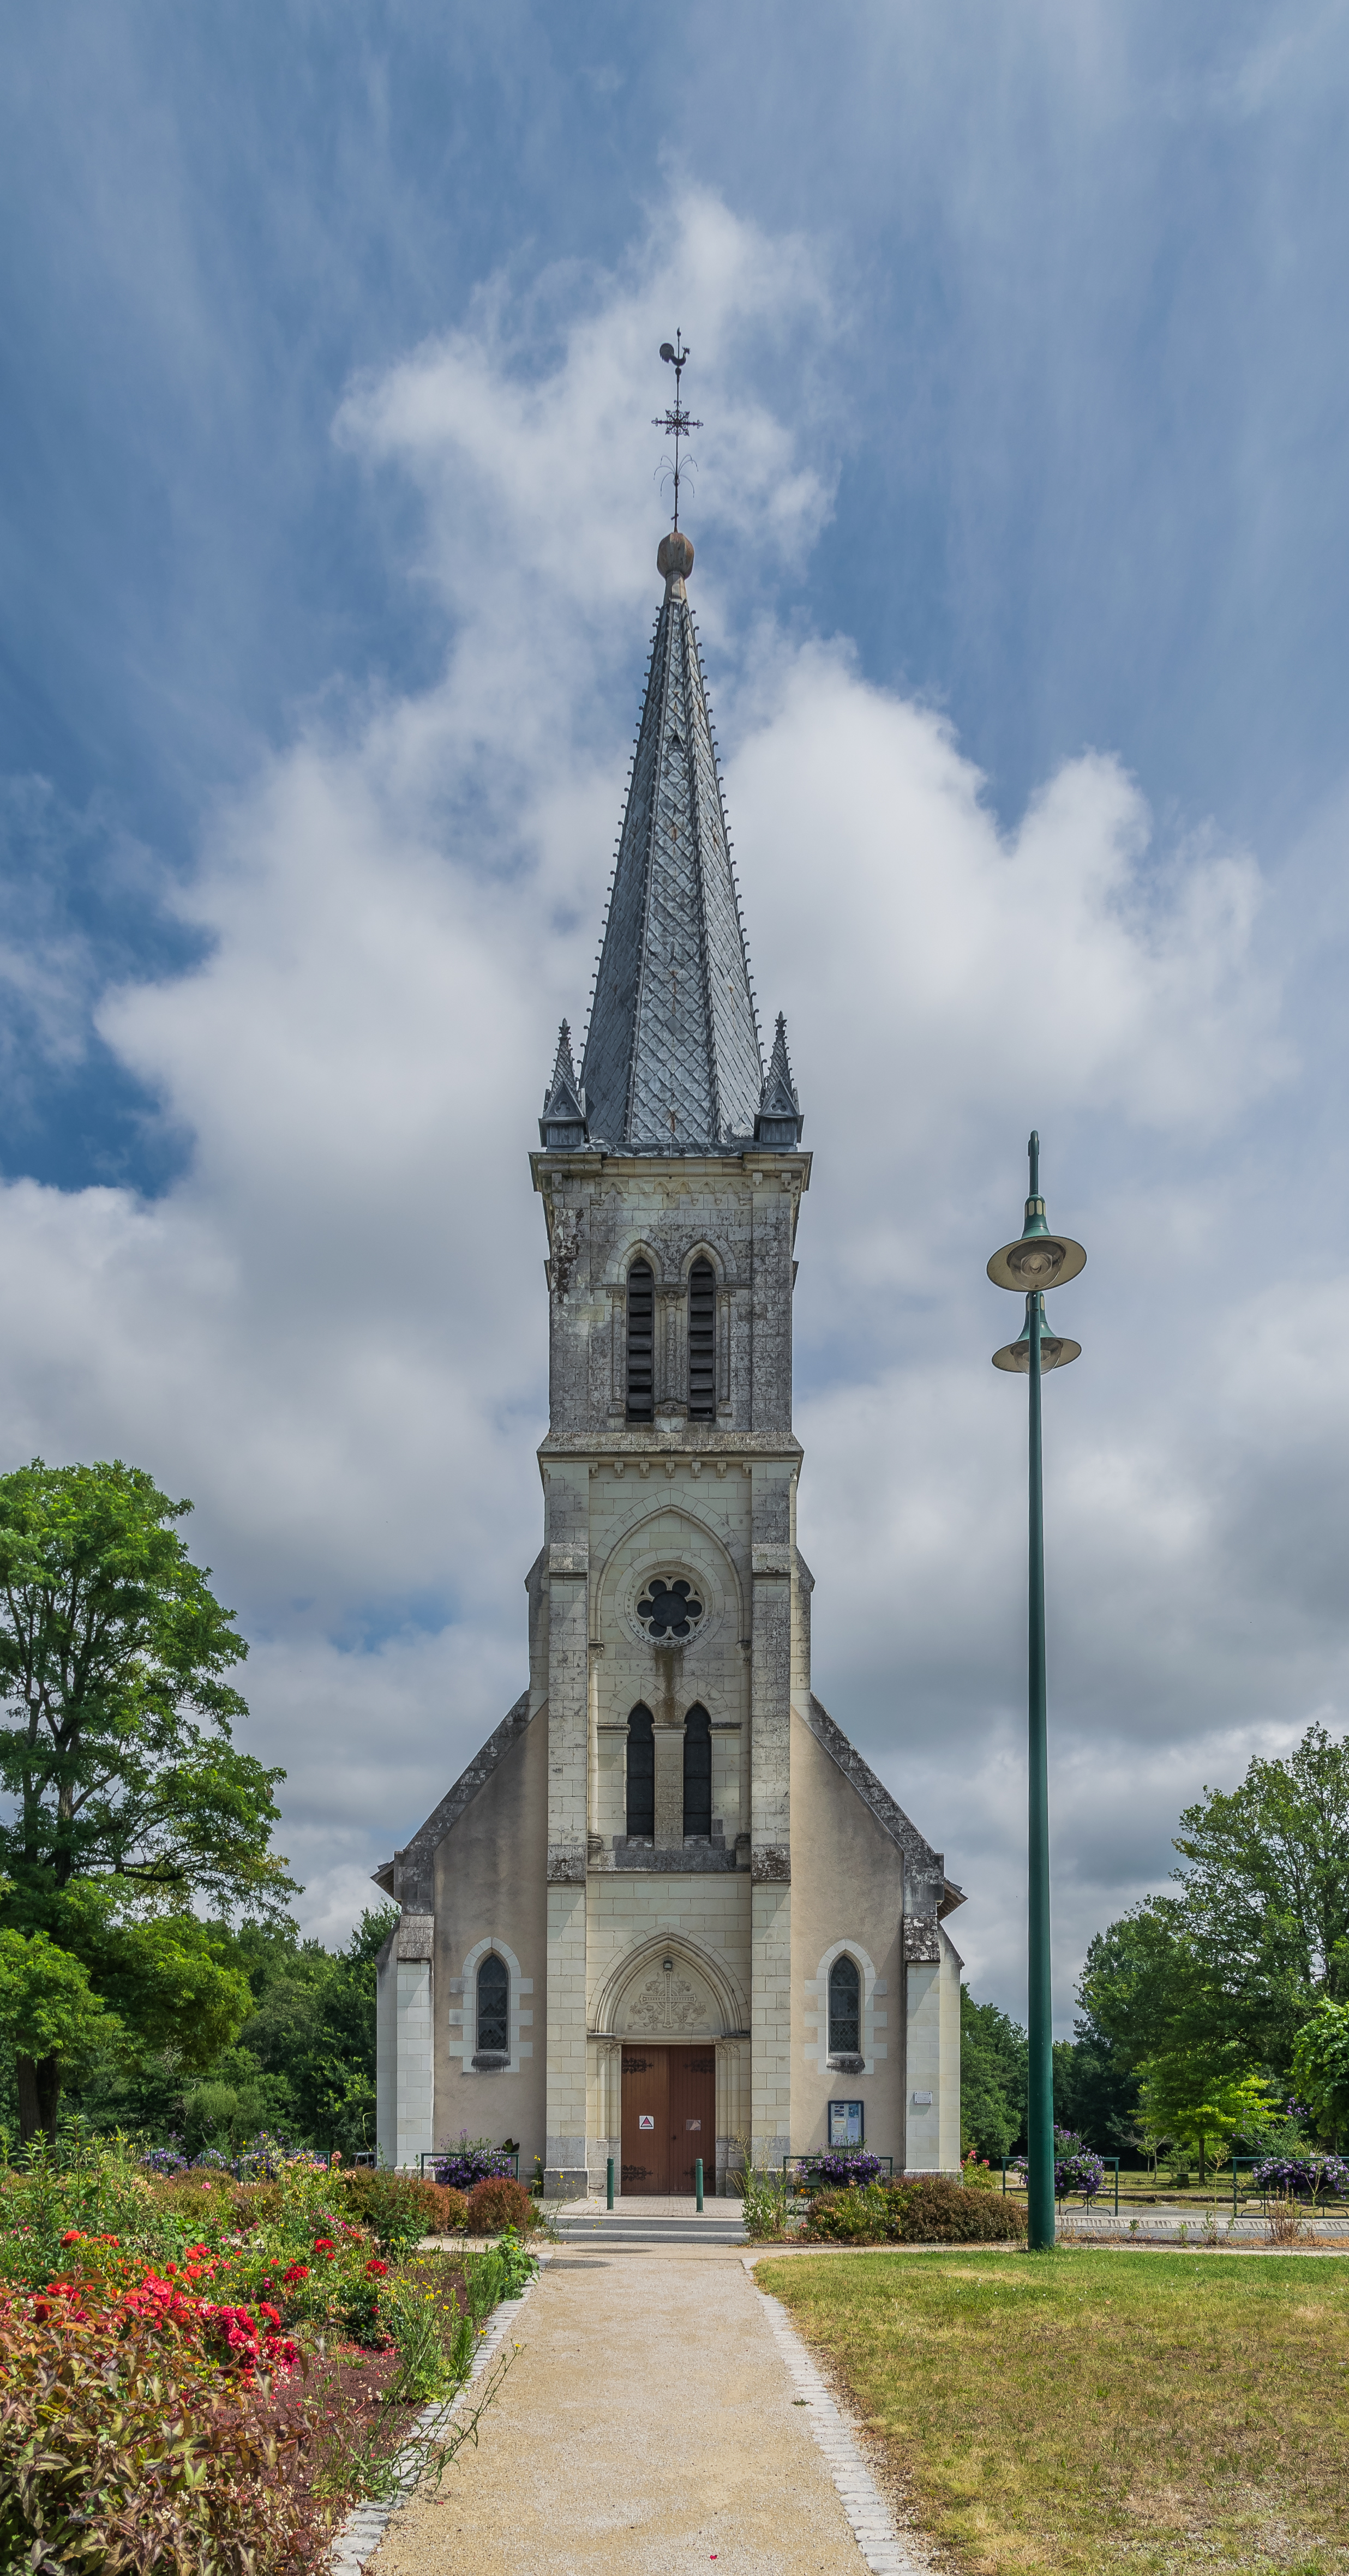 Saint Nicasius church of Bracieux 04